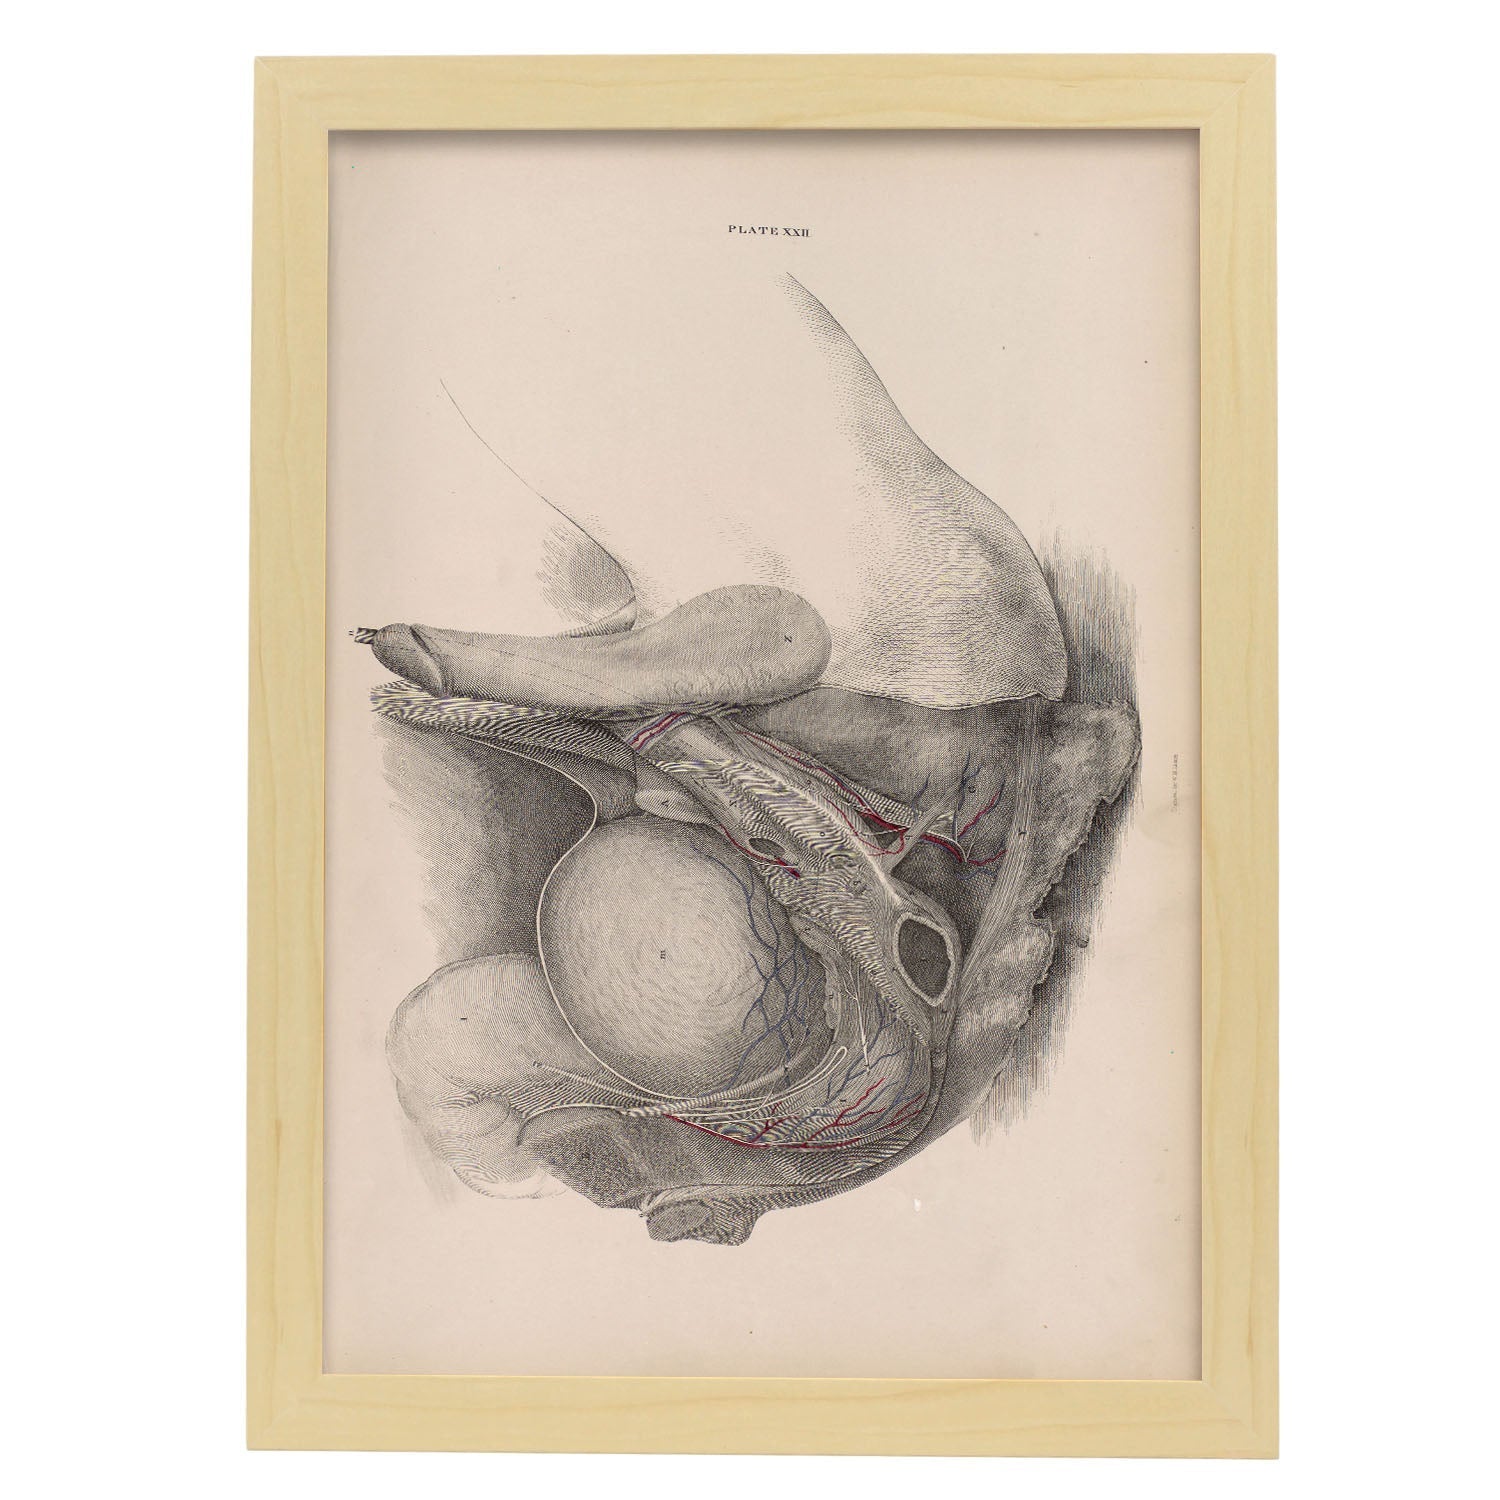 Dissection of the pelvis, urogenital system, male-Artwork-Nacnic-A3-Marco Madera clara-Nacnic Estudio SL